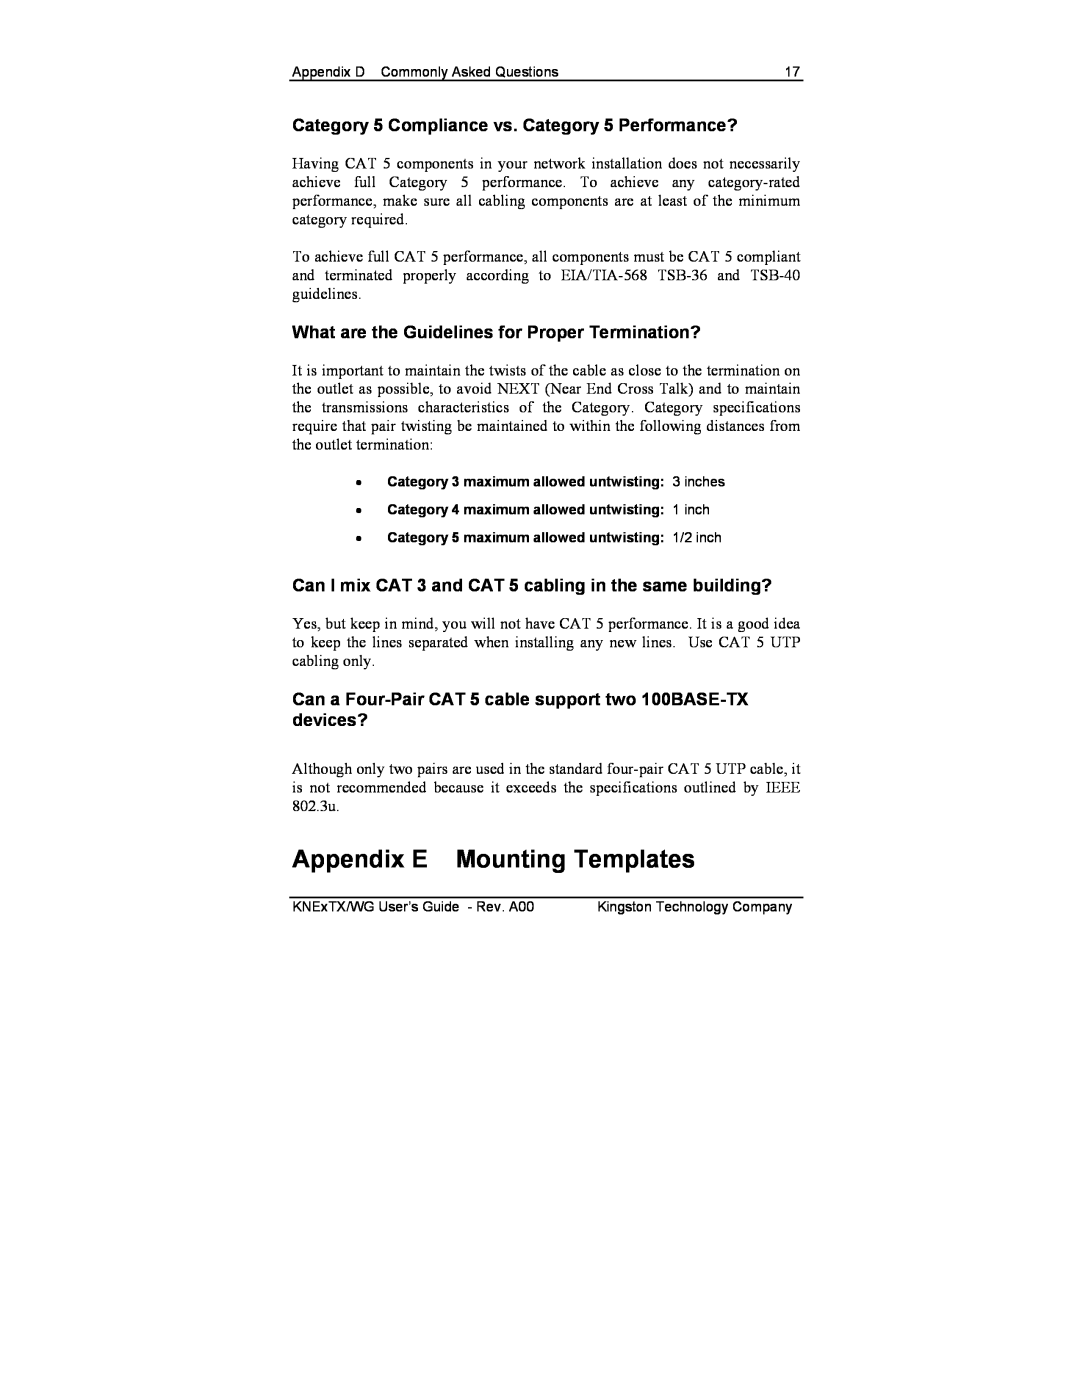 Kingston Technology KNE8TX/WG manual Appendix E Mounting Templates, Category 5 Compliance vs. Category 5 Performance? 